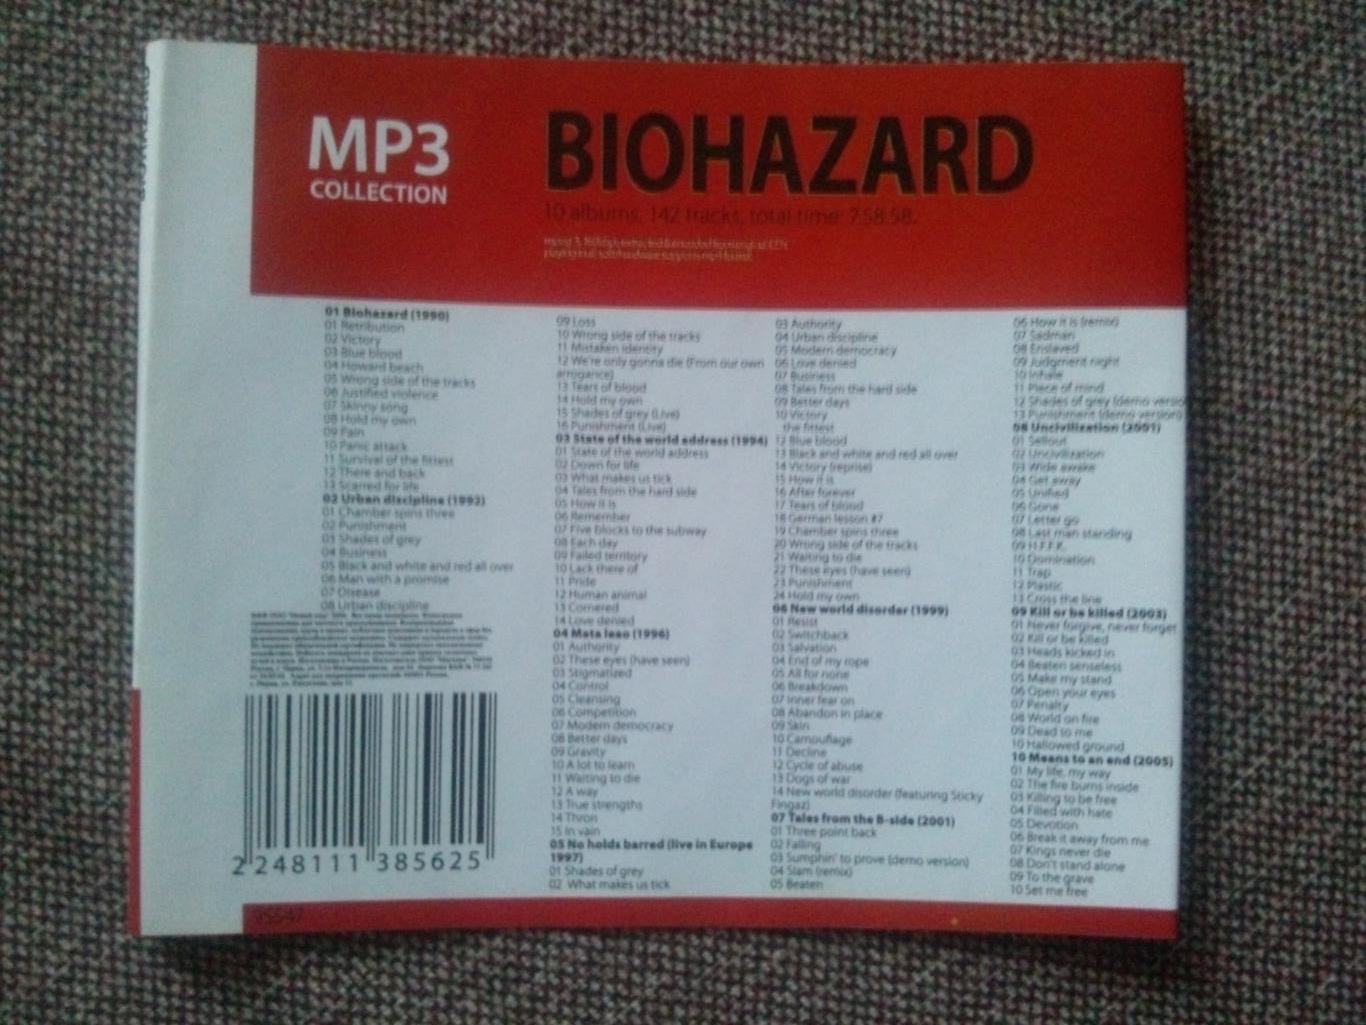 MP - 3 CD диск : группаBiohazard1990 - 2005 гг. 10 альбомов Thrash metal 5